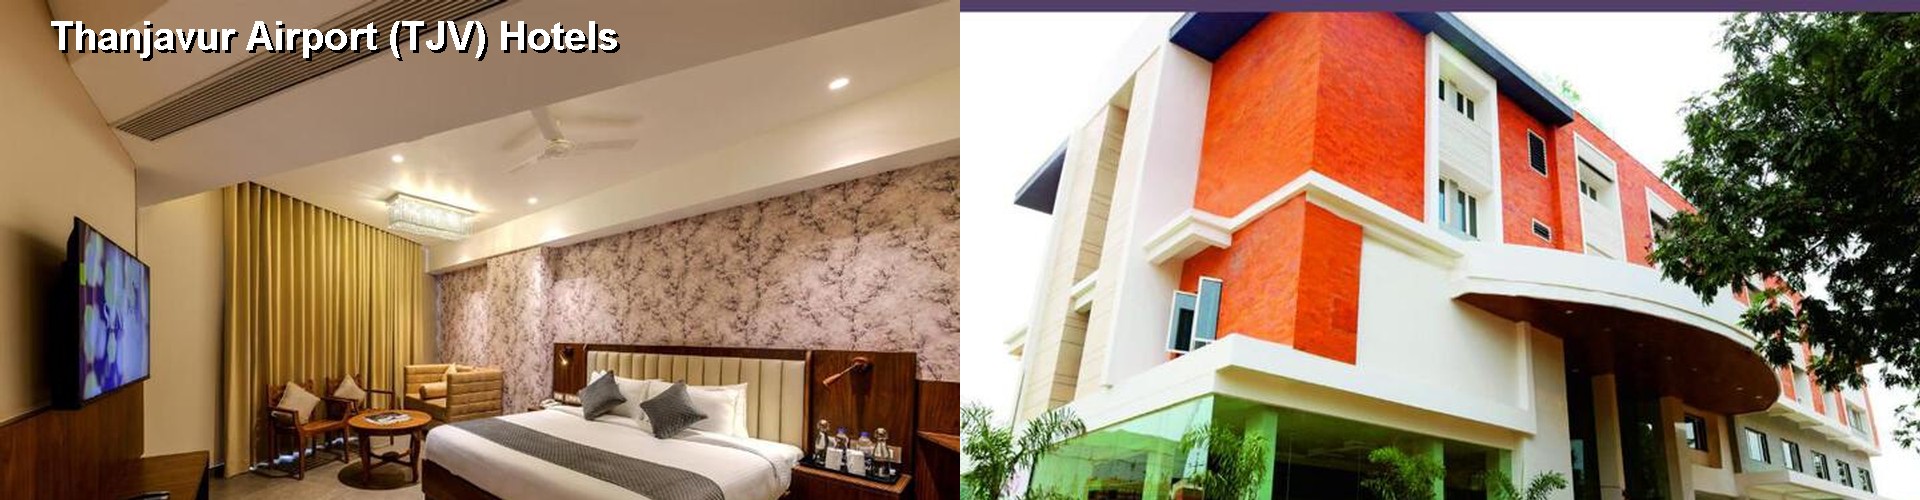 5 Best Hotels near Thanjavur Airport (TJV)